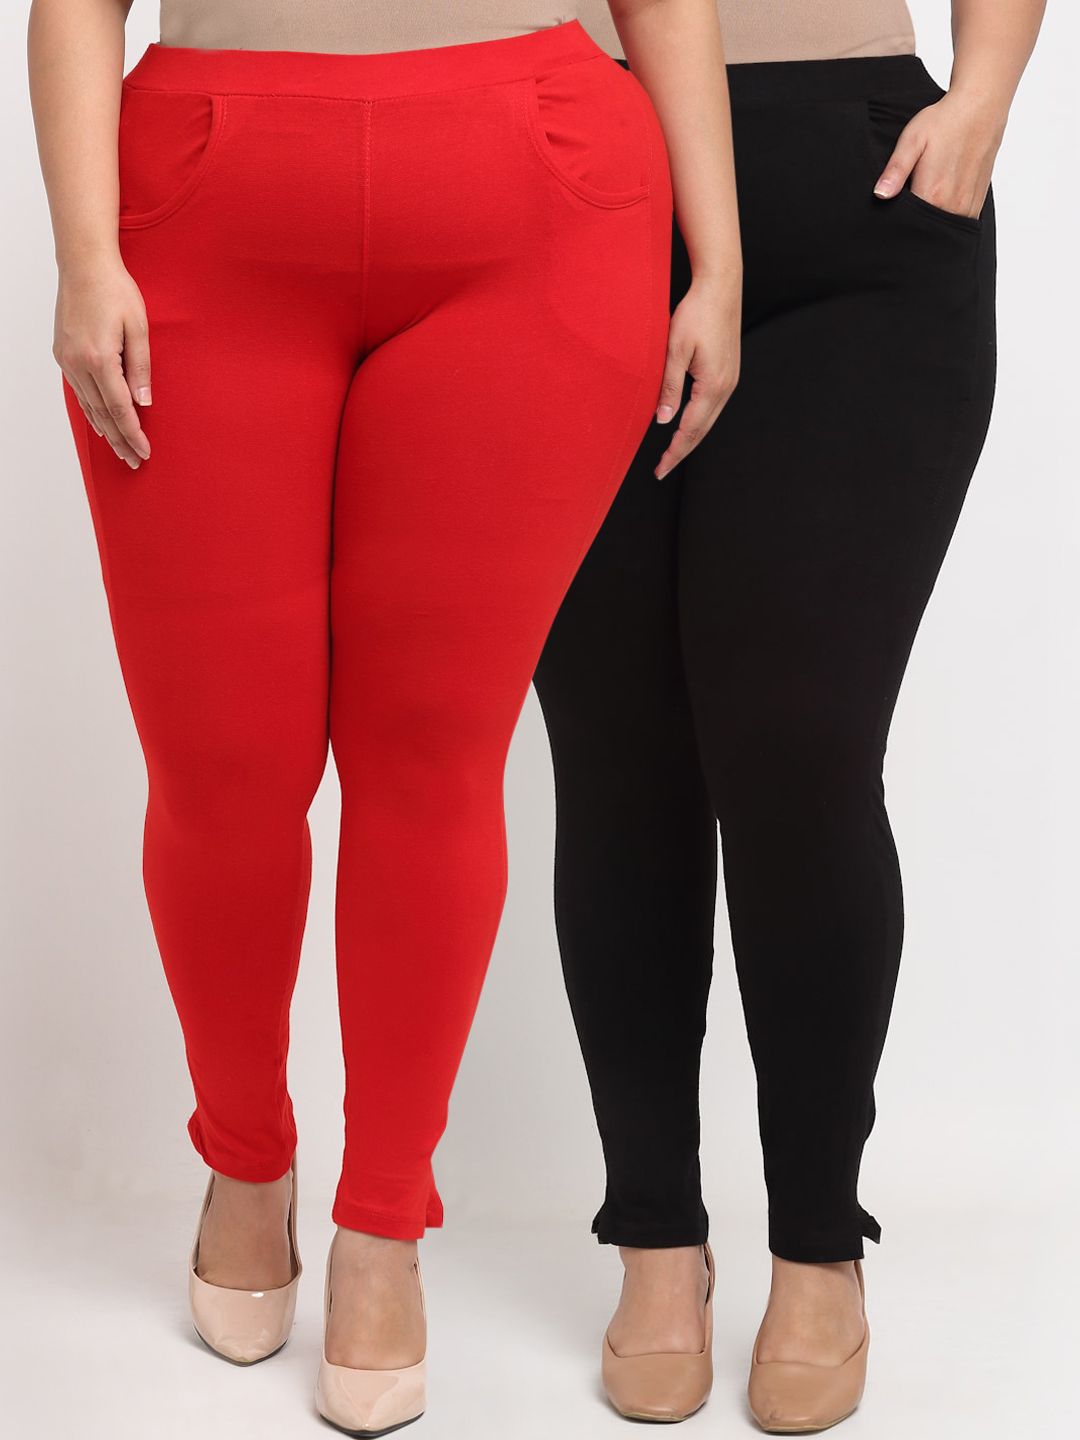 KLOTTHE Women Plus Size Pack of 2 Red & Black Solid Leggings Price in India